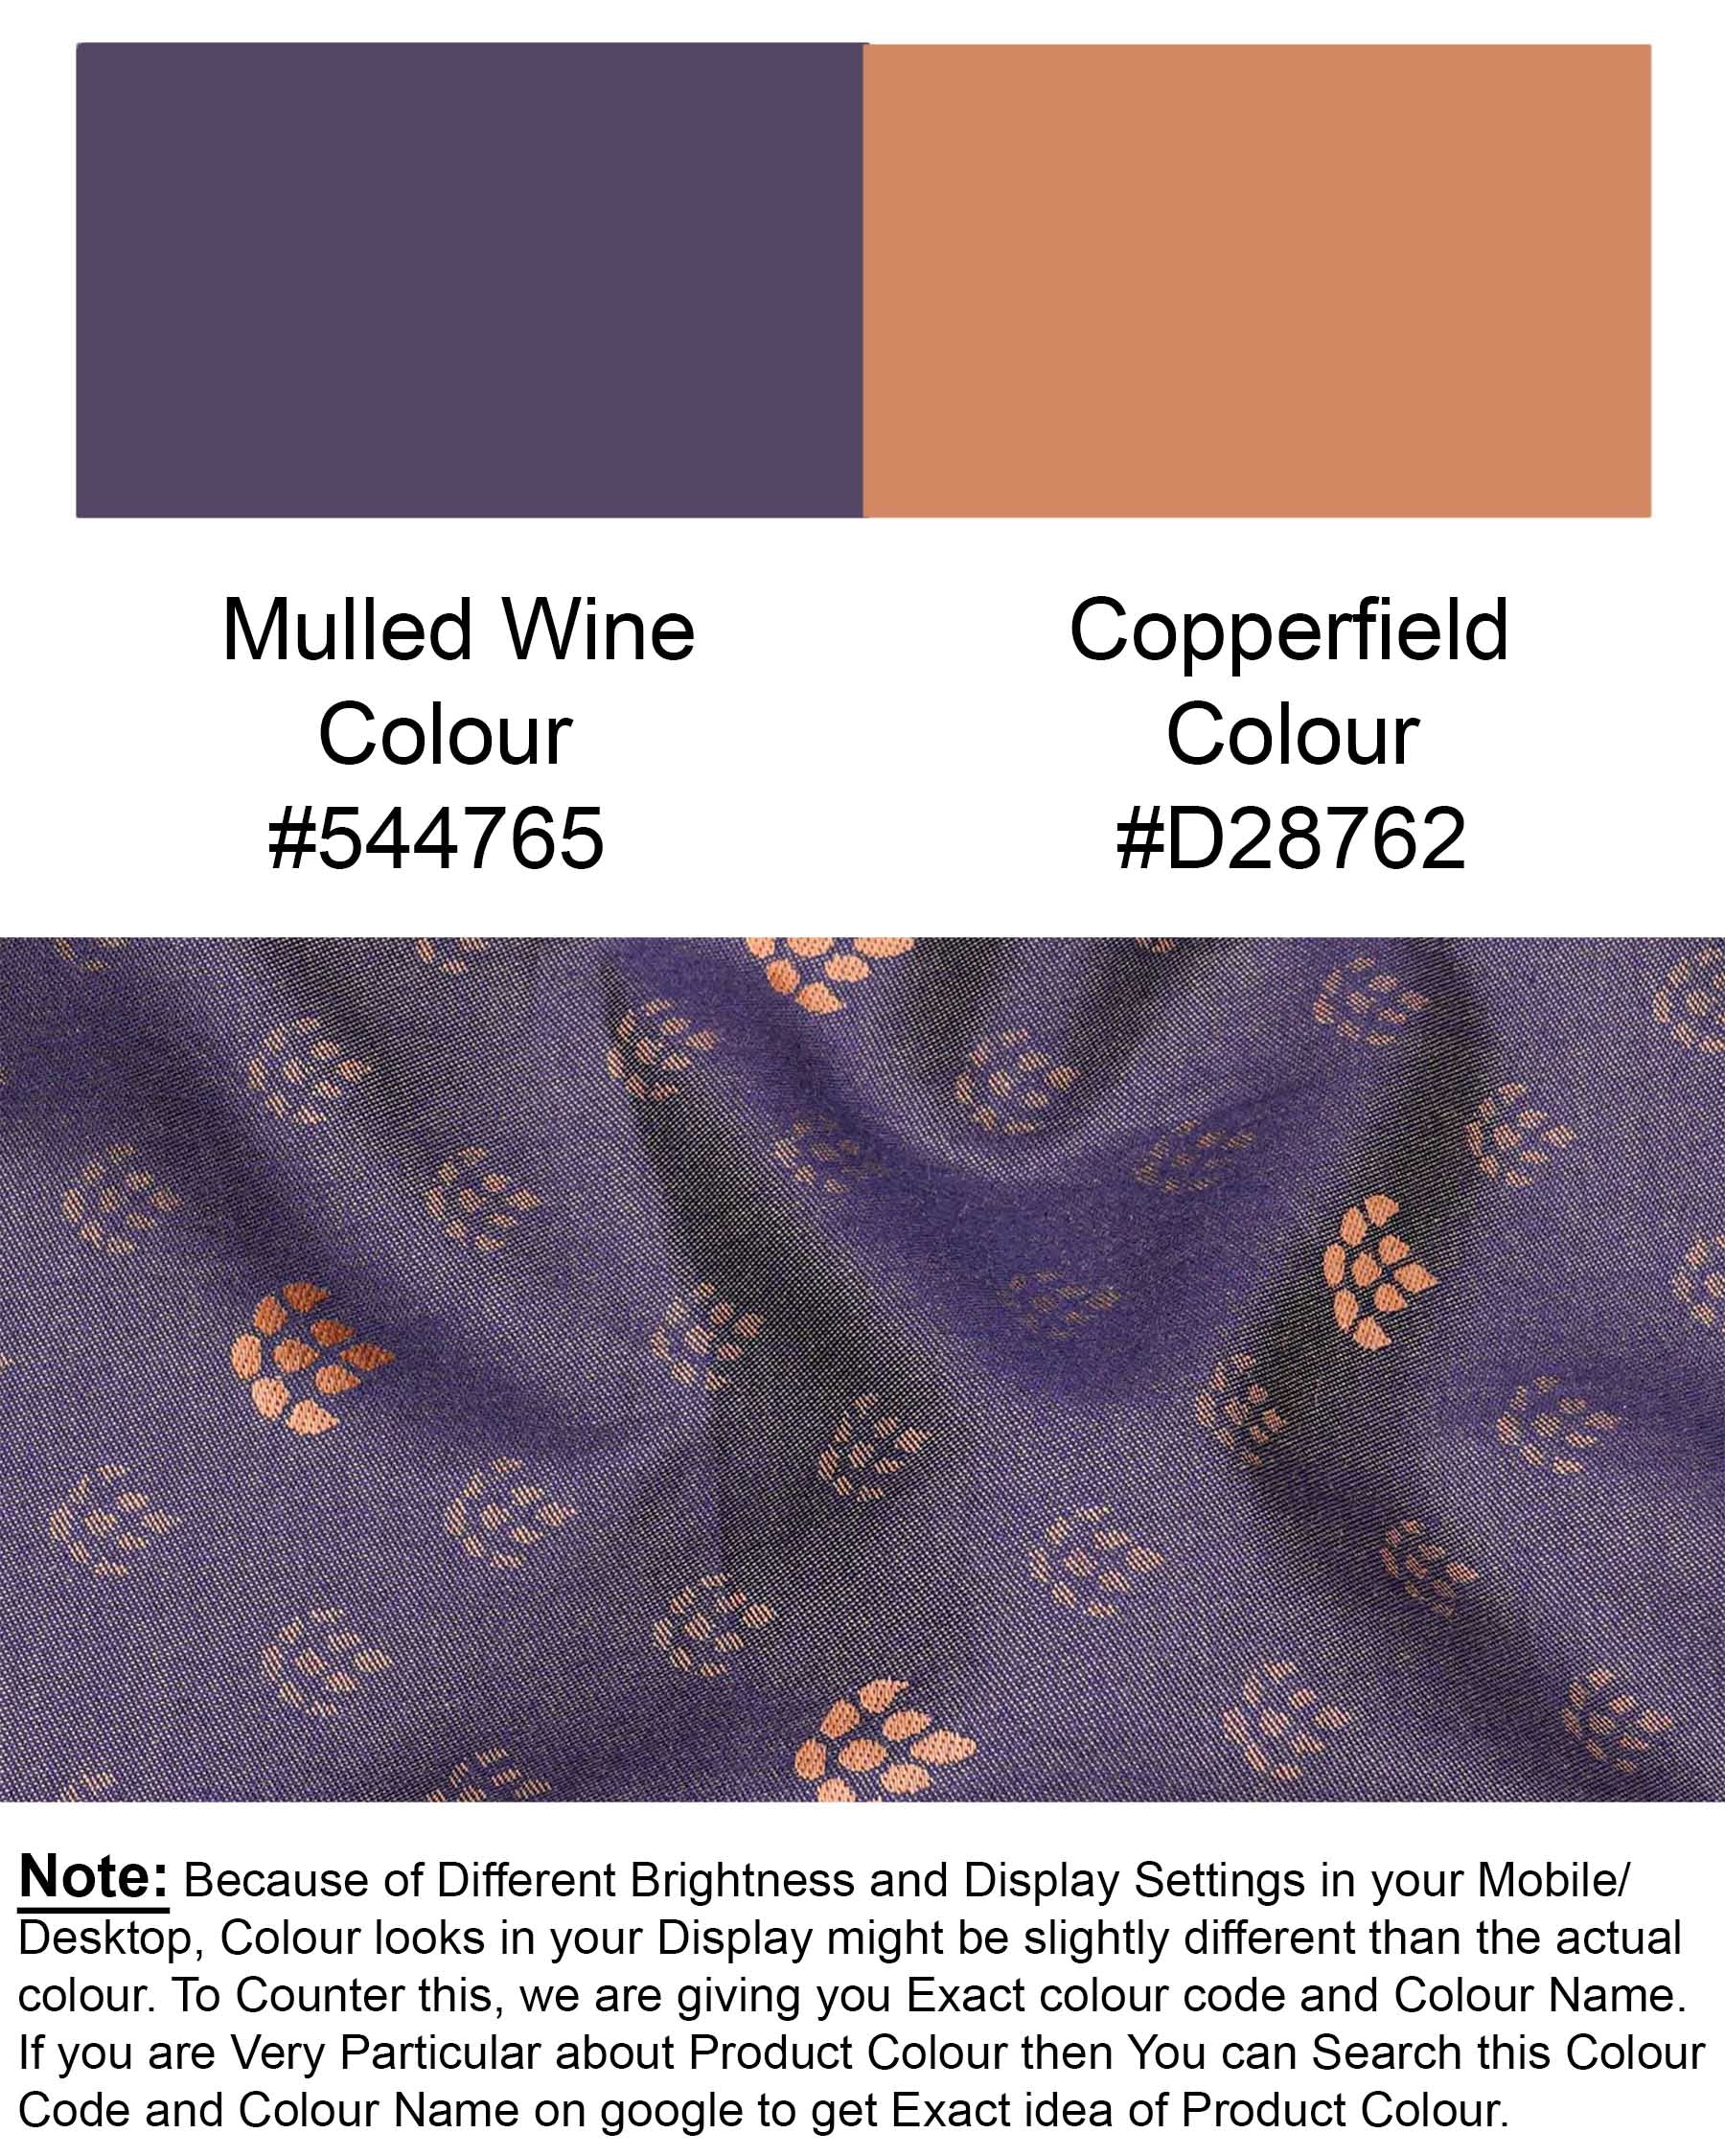 Mulled Wine Violet Paw Jacquard Textured Premium Giza Cotton Shirt 7506-BLE-38, 7506-BLE-H-38, 7506-BLE-39, 7506-BLE-H-39, 7506-BLE-40, 7506-BLE-H-40, 7506-BLE-42, 7506-BLE-H-42, 7506-BLE-44, 7506-BLE-H-44, 7506-BLE-46, 7506-BLE-H-46, 7506-BLE-48, 7506-BLE-H-48, 7506-BLE-50, 7506-BLE-H-50, 7506-BLE-52, 7506-BLE-H-52